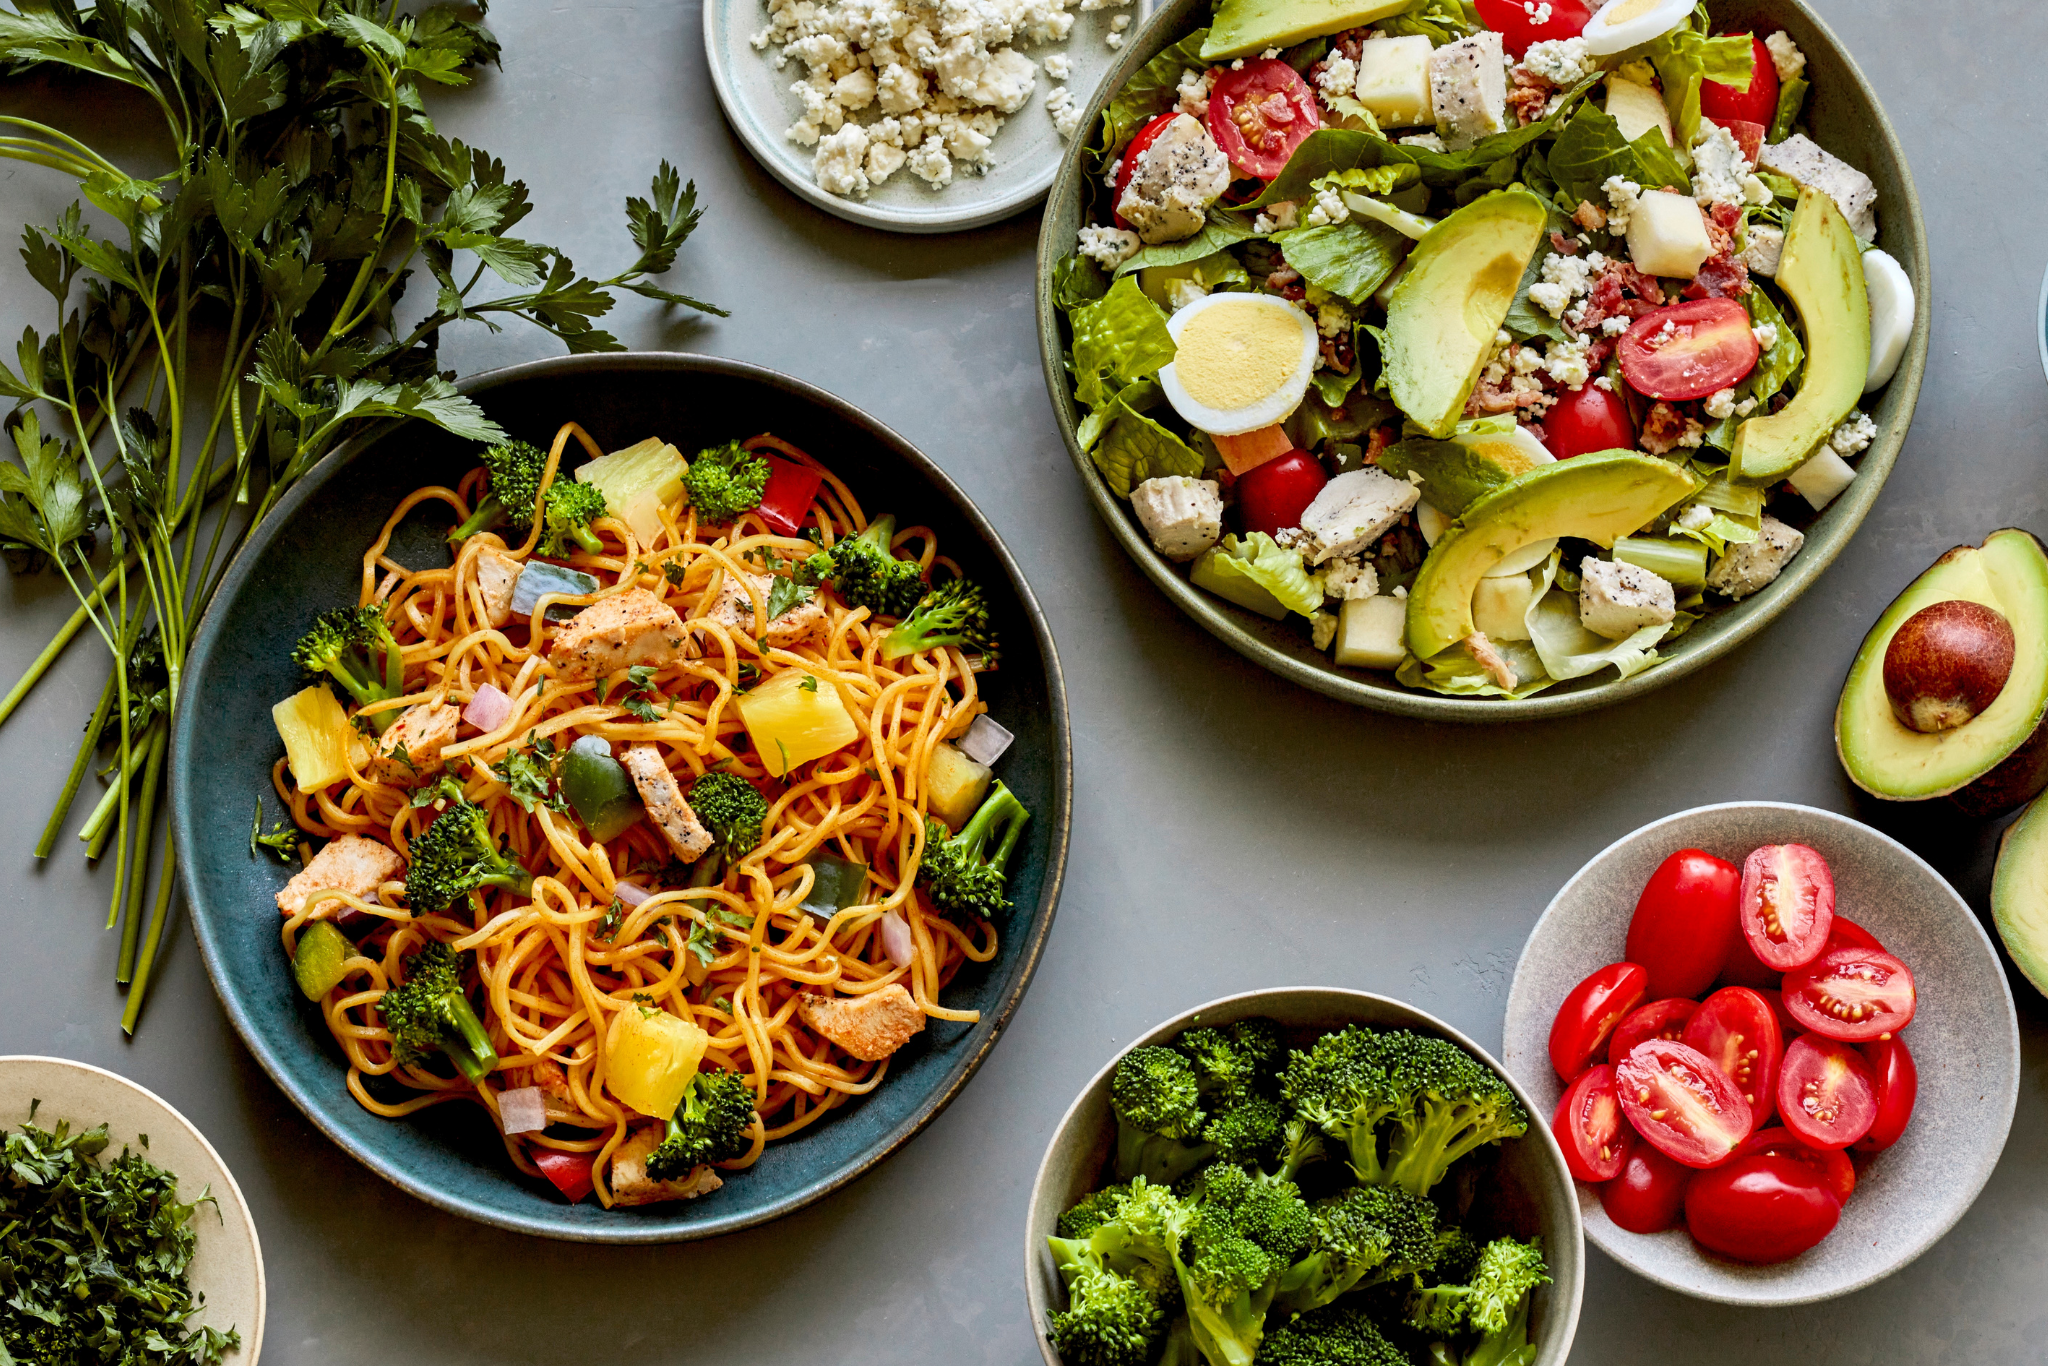 honeygrow fundraiser lifestyle options - salads, stir fry and vegetables